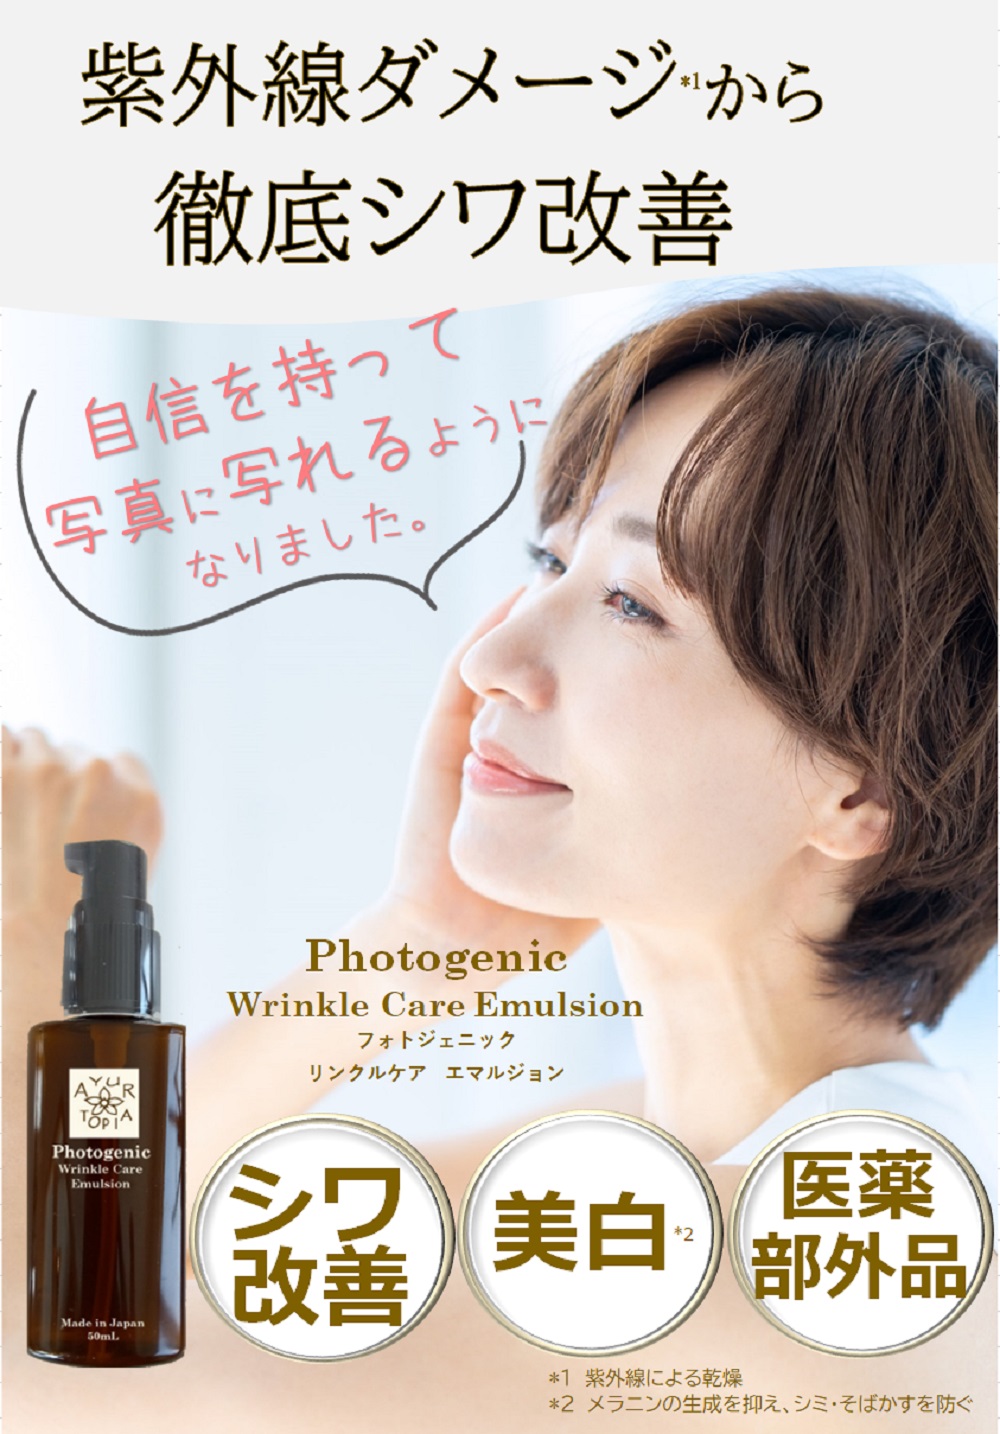 『Photogenic Wrinkle Care Emulsion フォトジェニック リンクルケア エマルジョン』 紫外線ダメージによるシワ改善美容乳液